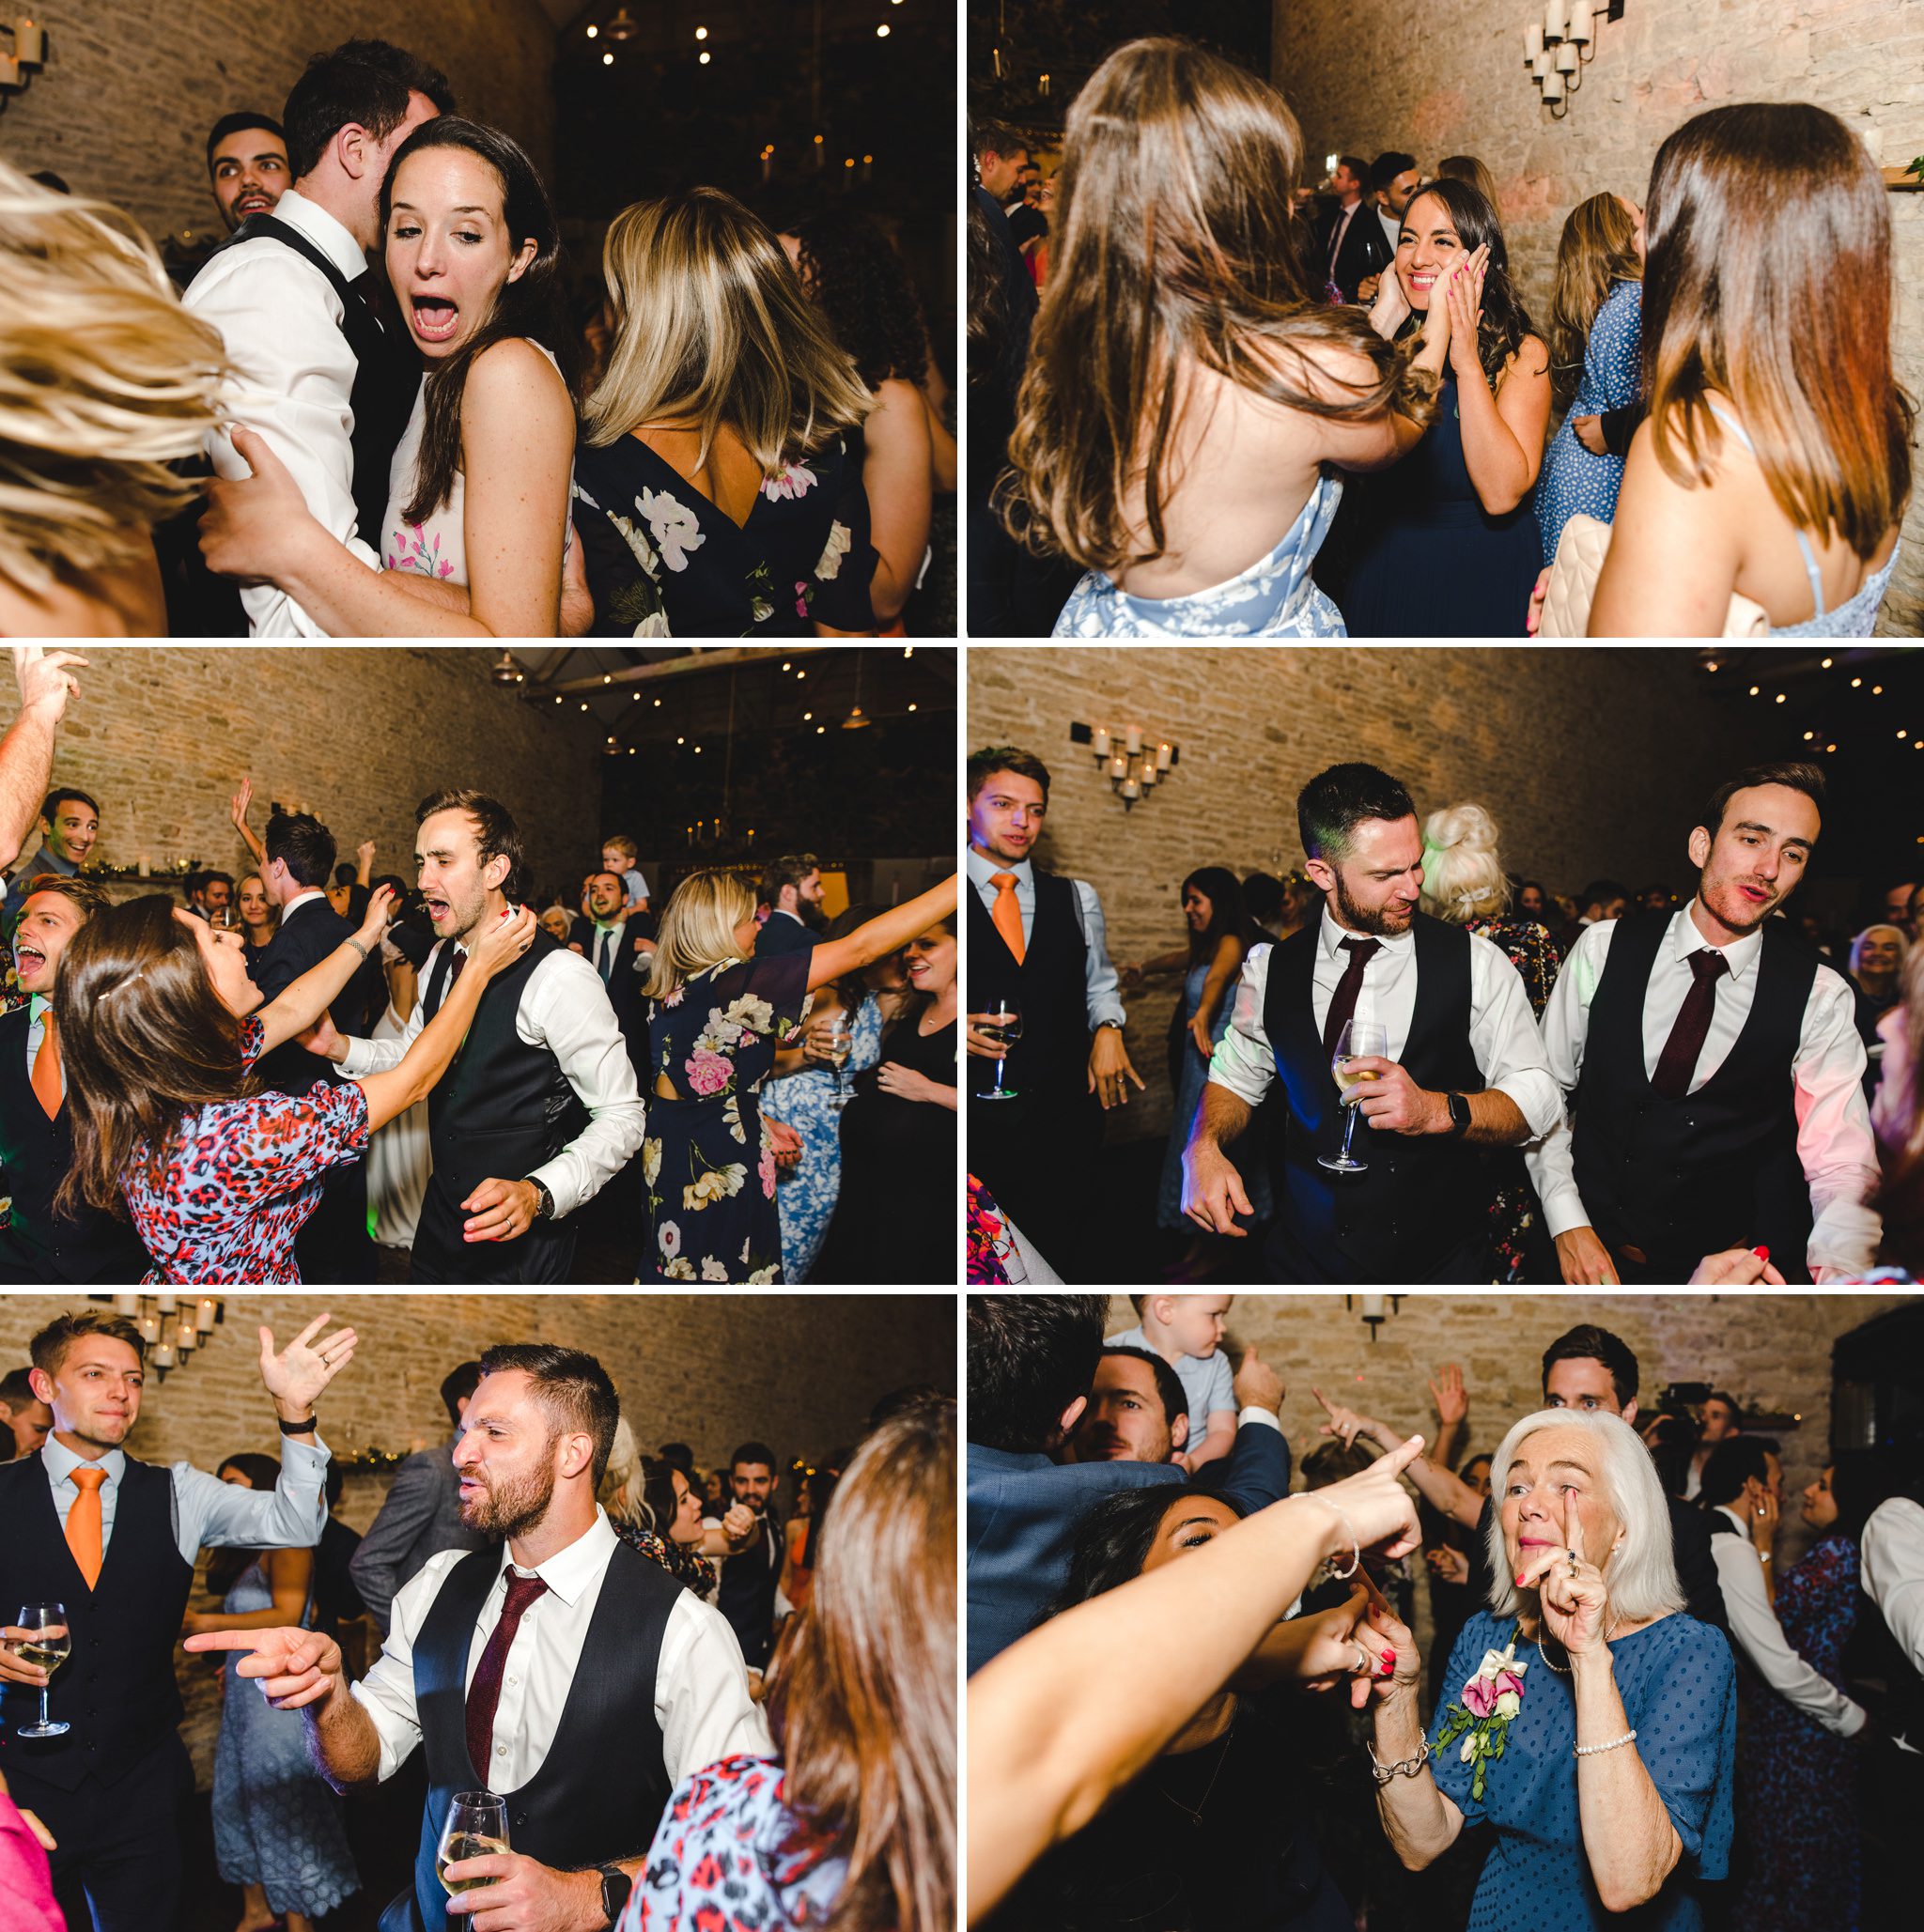 Wedding guests dancing at a Merriscourt Wedding